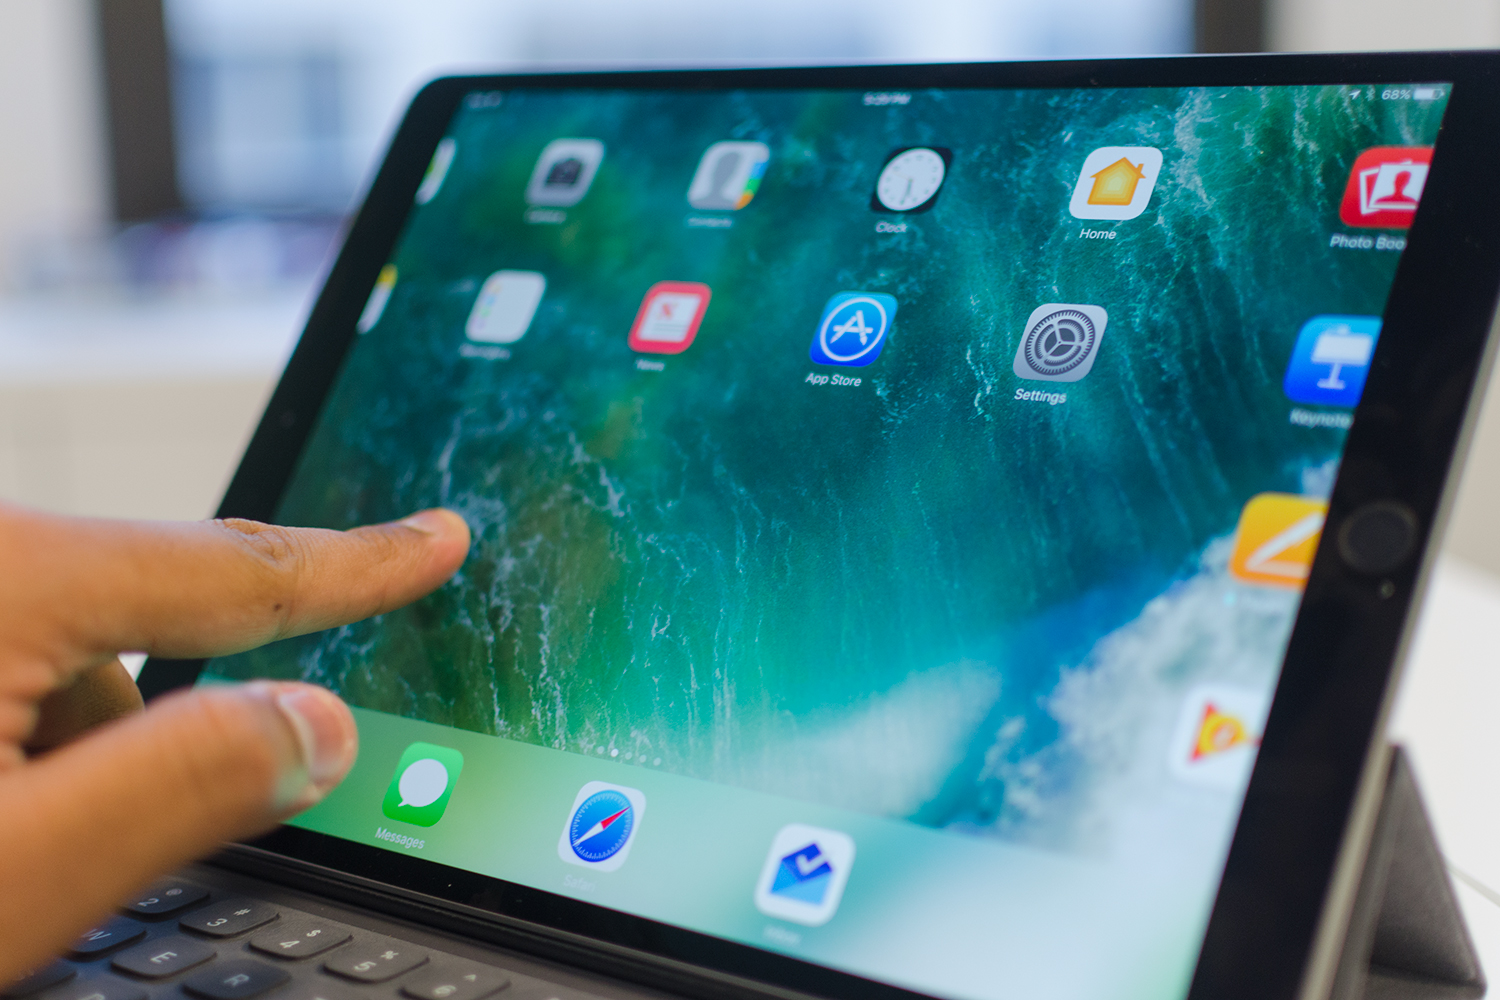 Apple iPad Pro 10.5 is Apple's best tablet